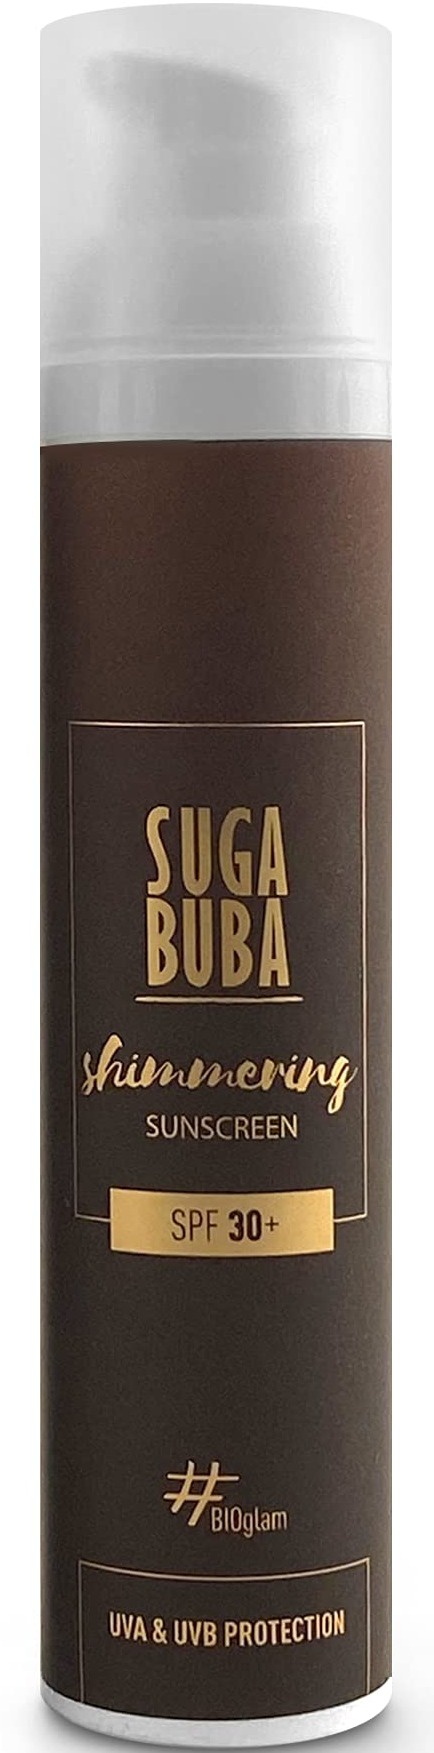 Sugabuba Shimmering Sunscreen SPF 30